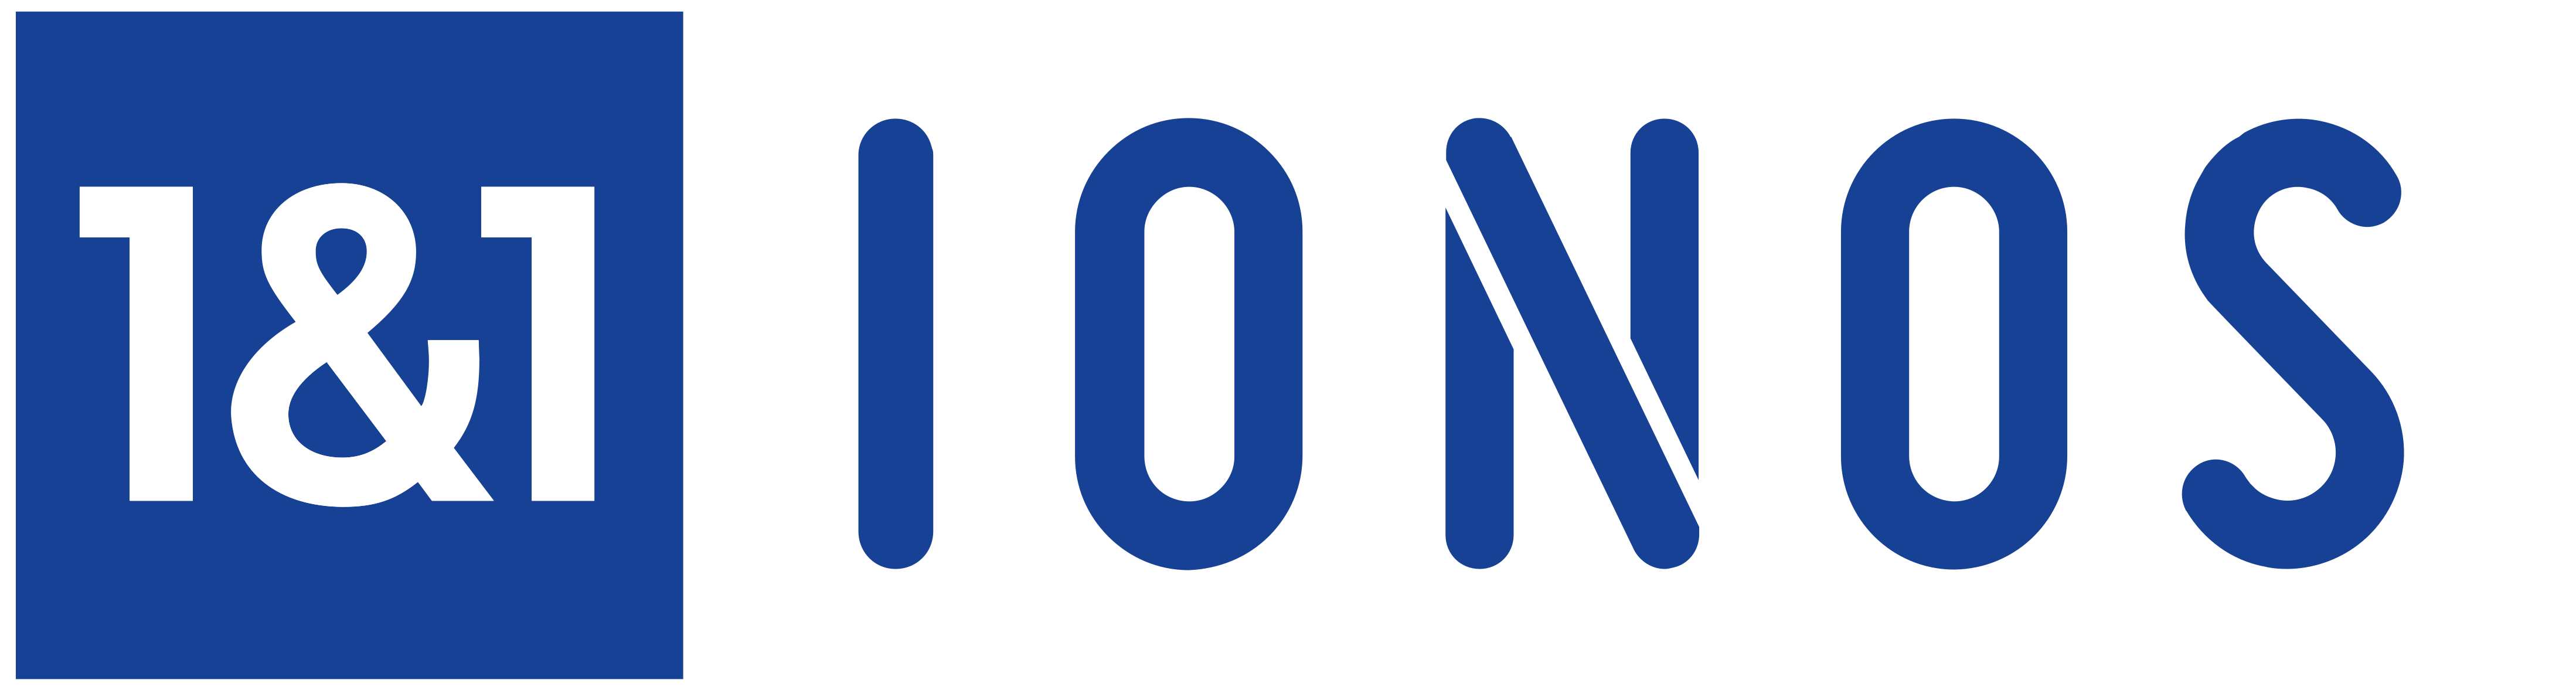 IONOS by 1&1 logo